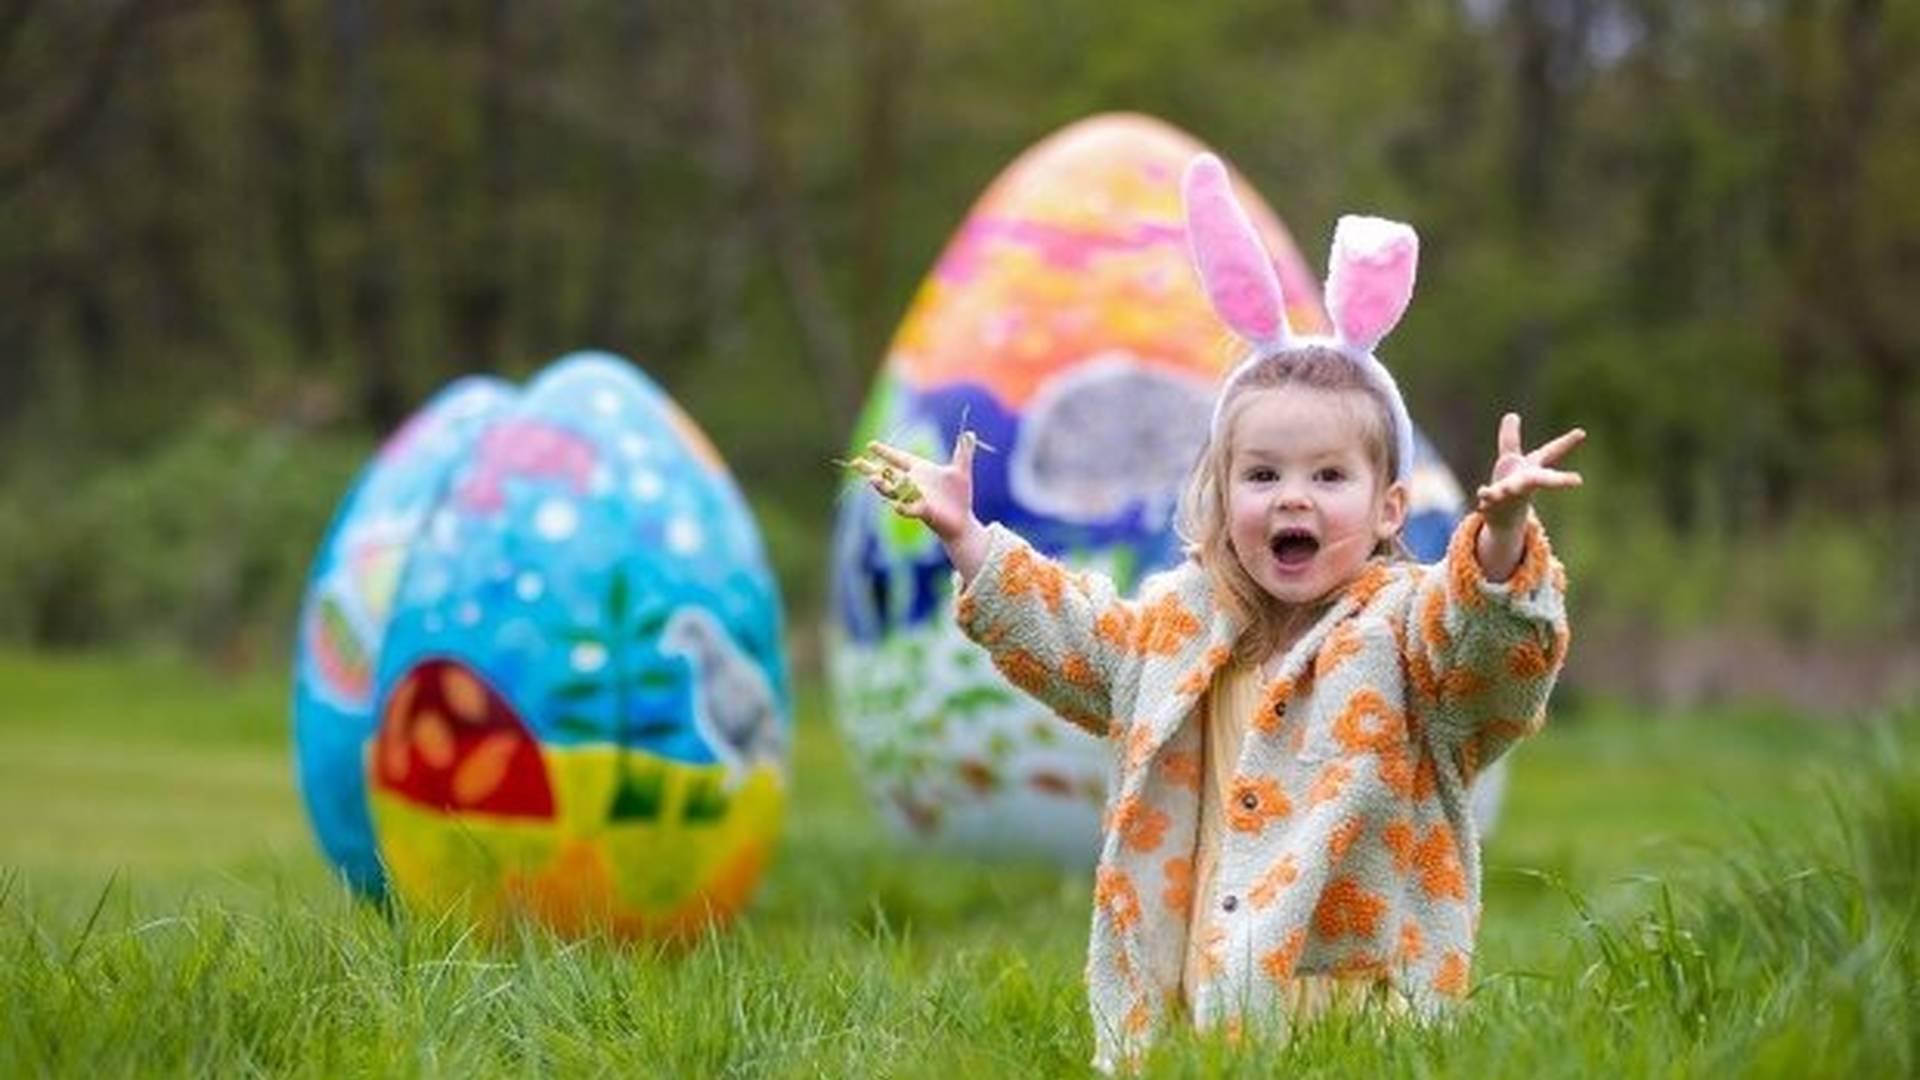 The giant Easter egg hunt photo